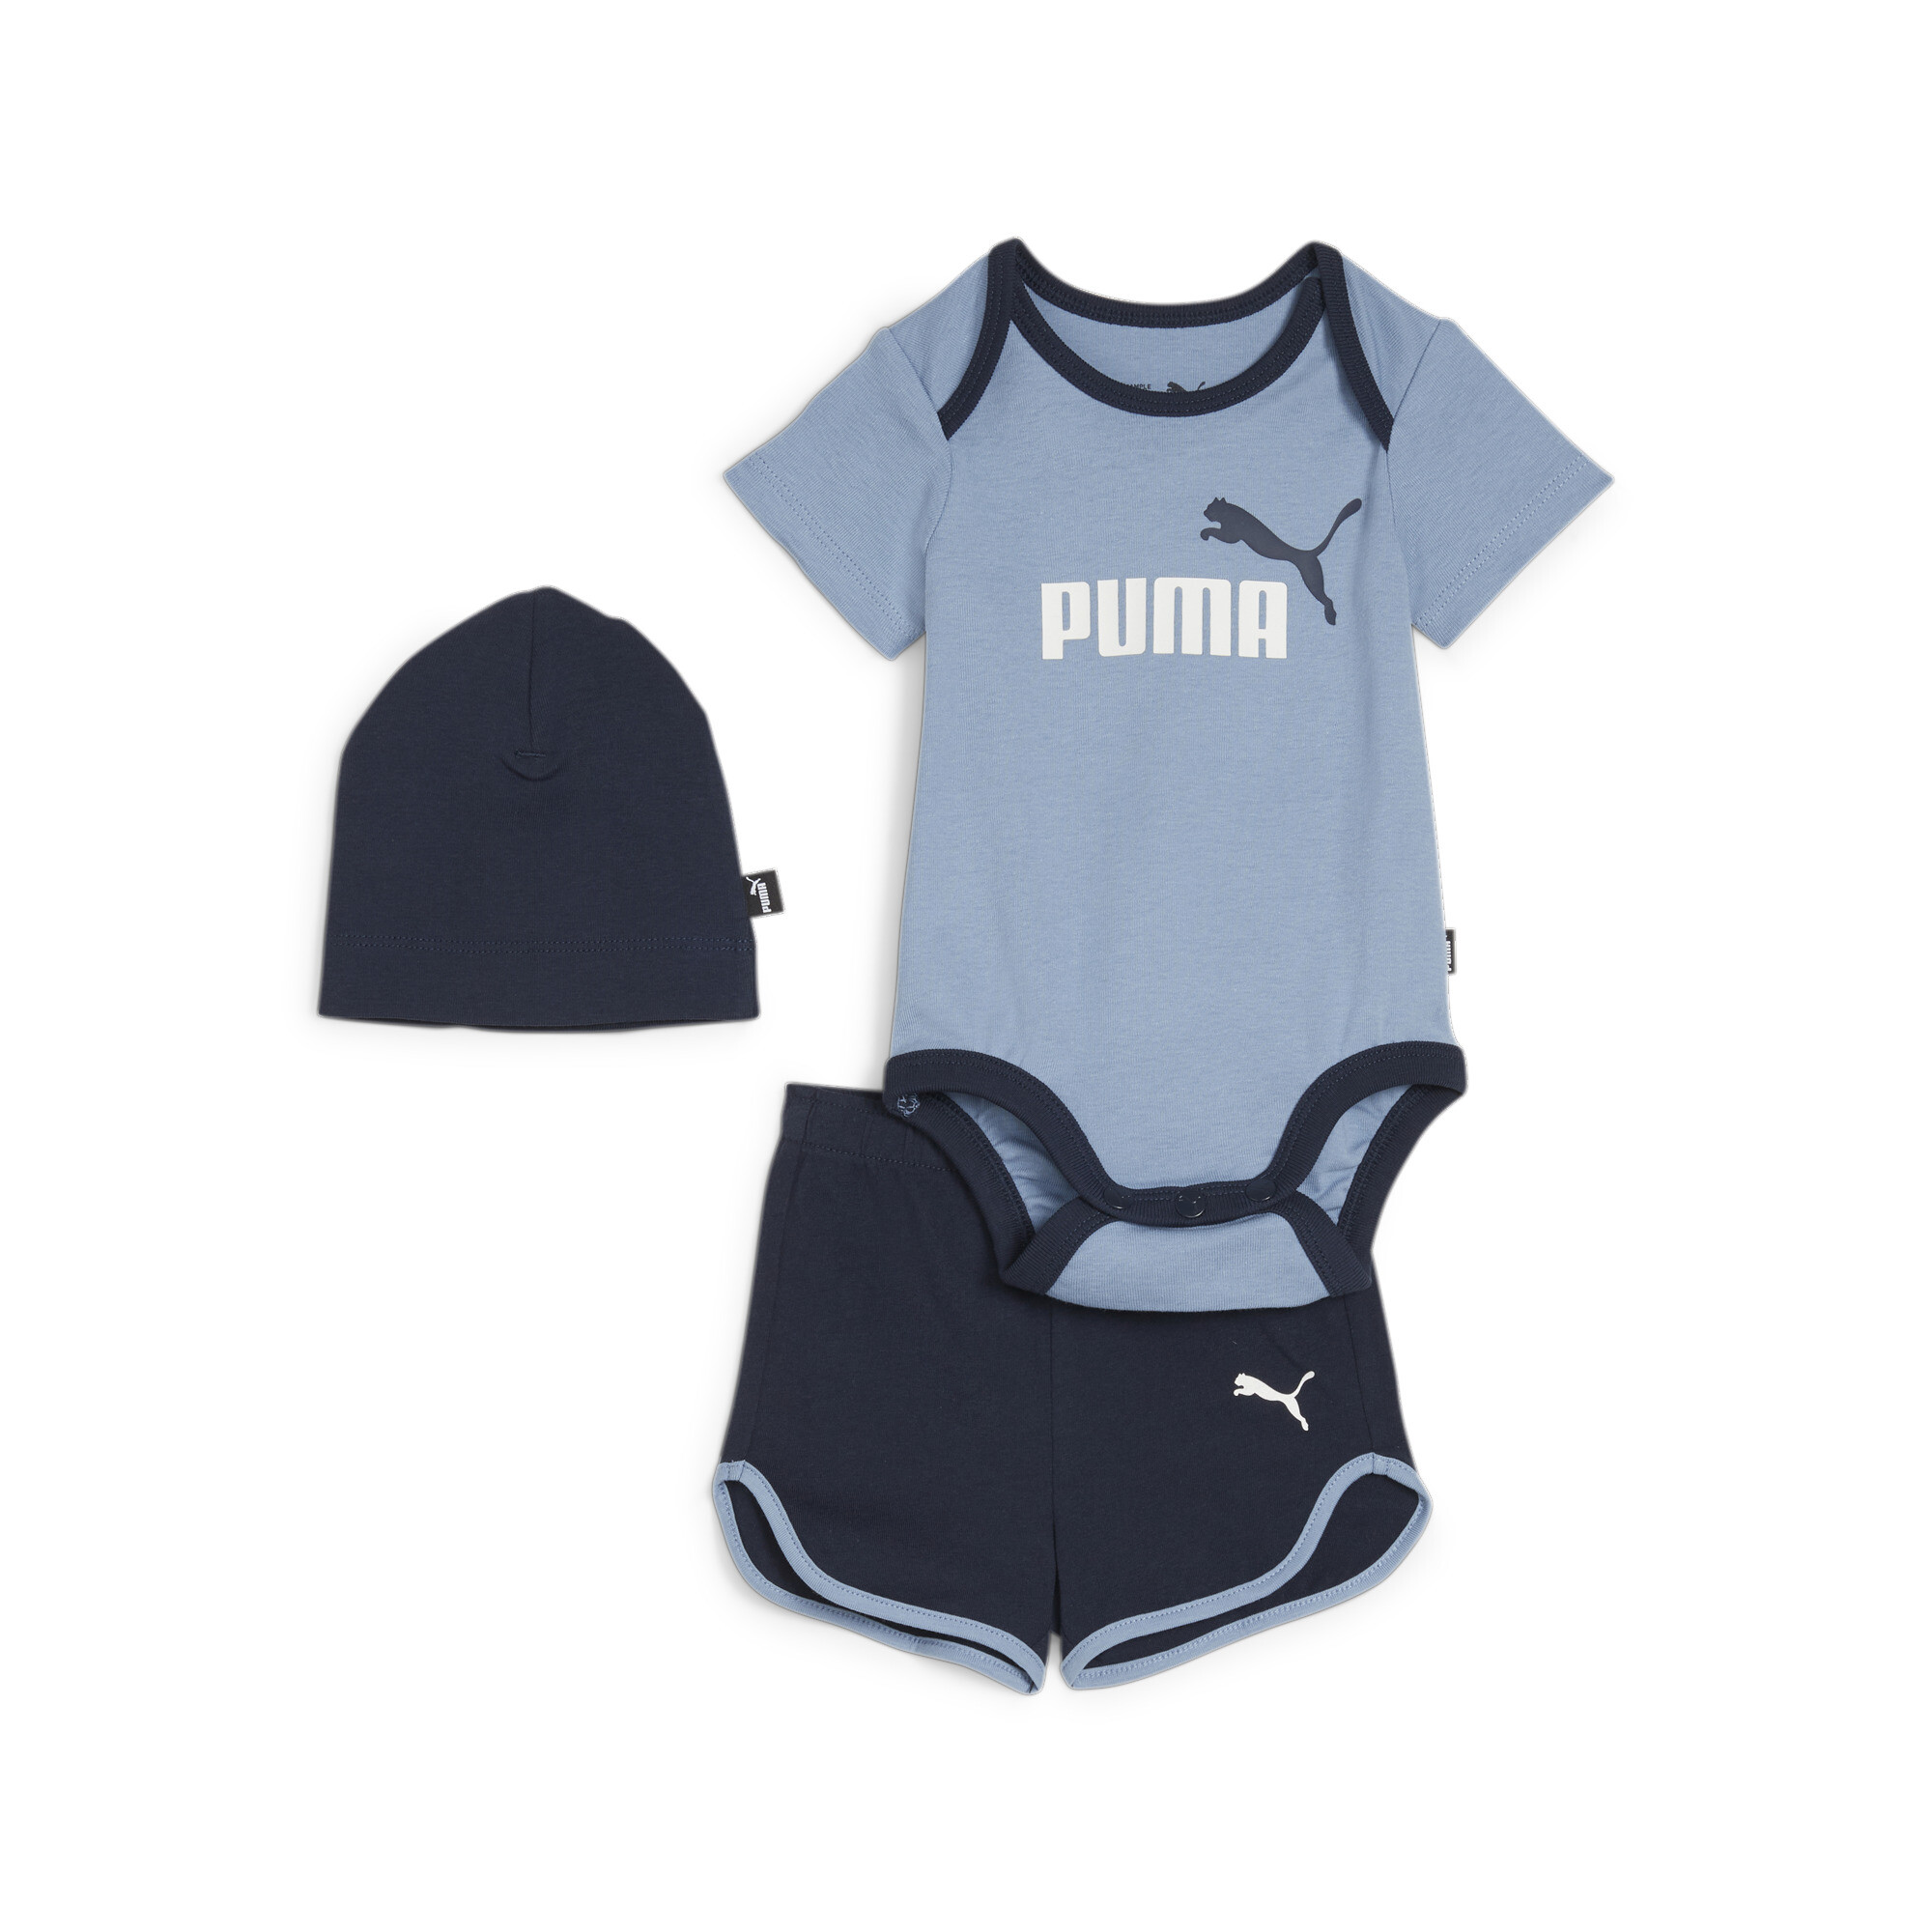 Puma Minicats Beanie Hat Newborn Set Baby, Blue, Size 1-2M, Clothing